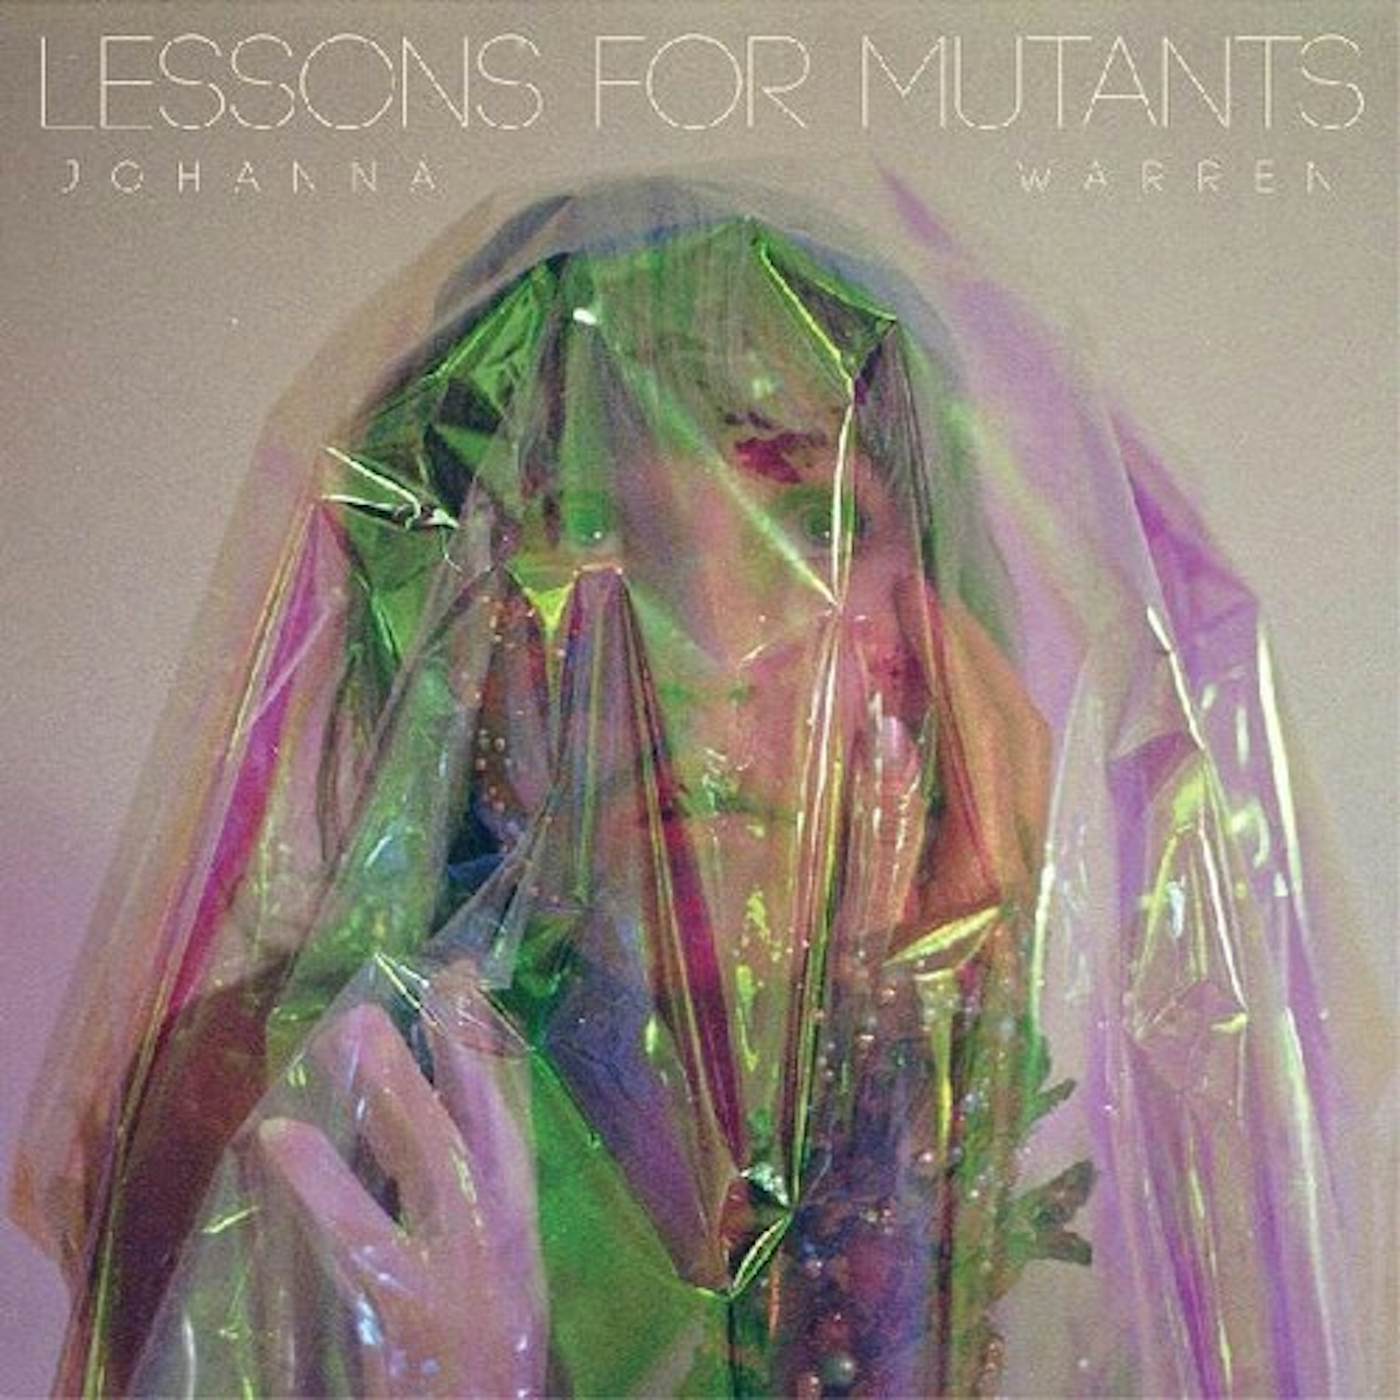 Johanna Warren Lessons For Mutants vinyl record